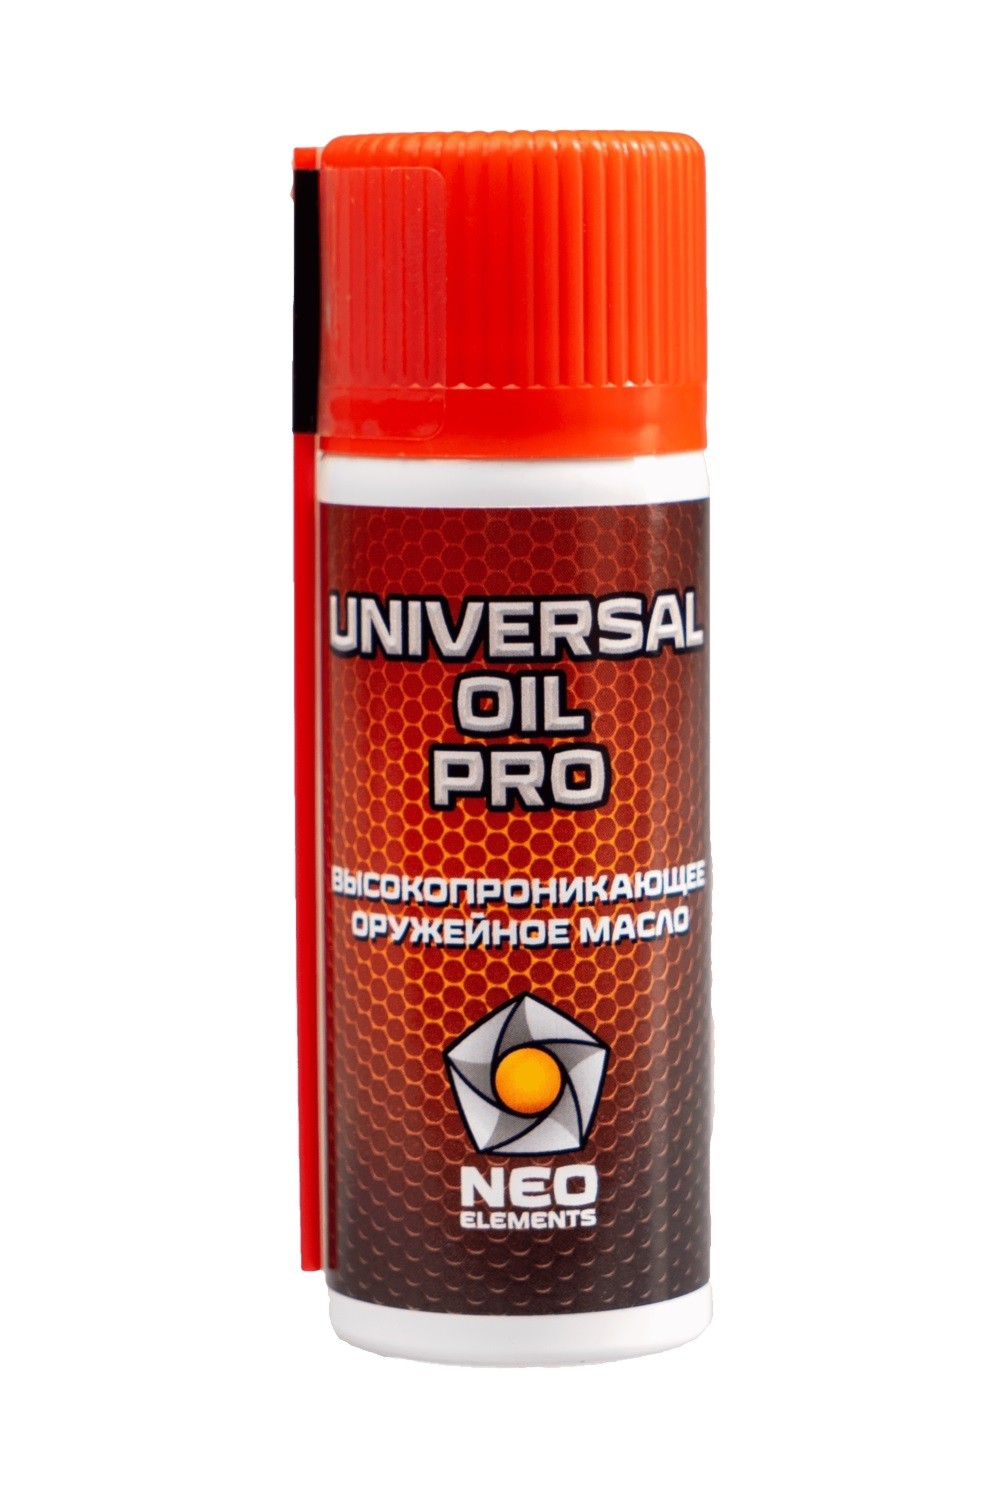 Масло Neo Elements Universal oil pro оружейное 75мл